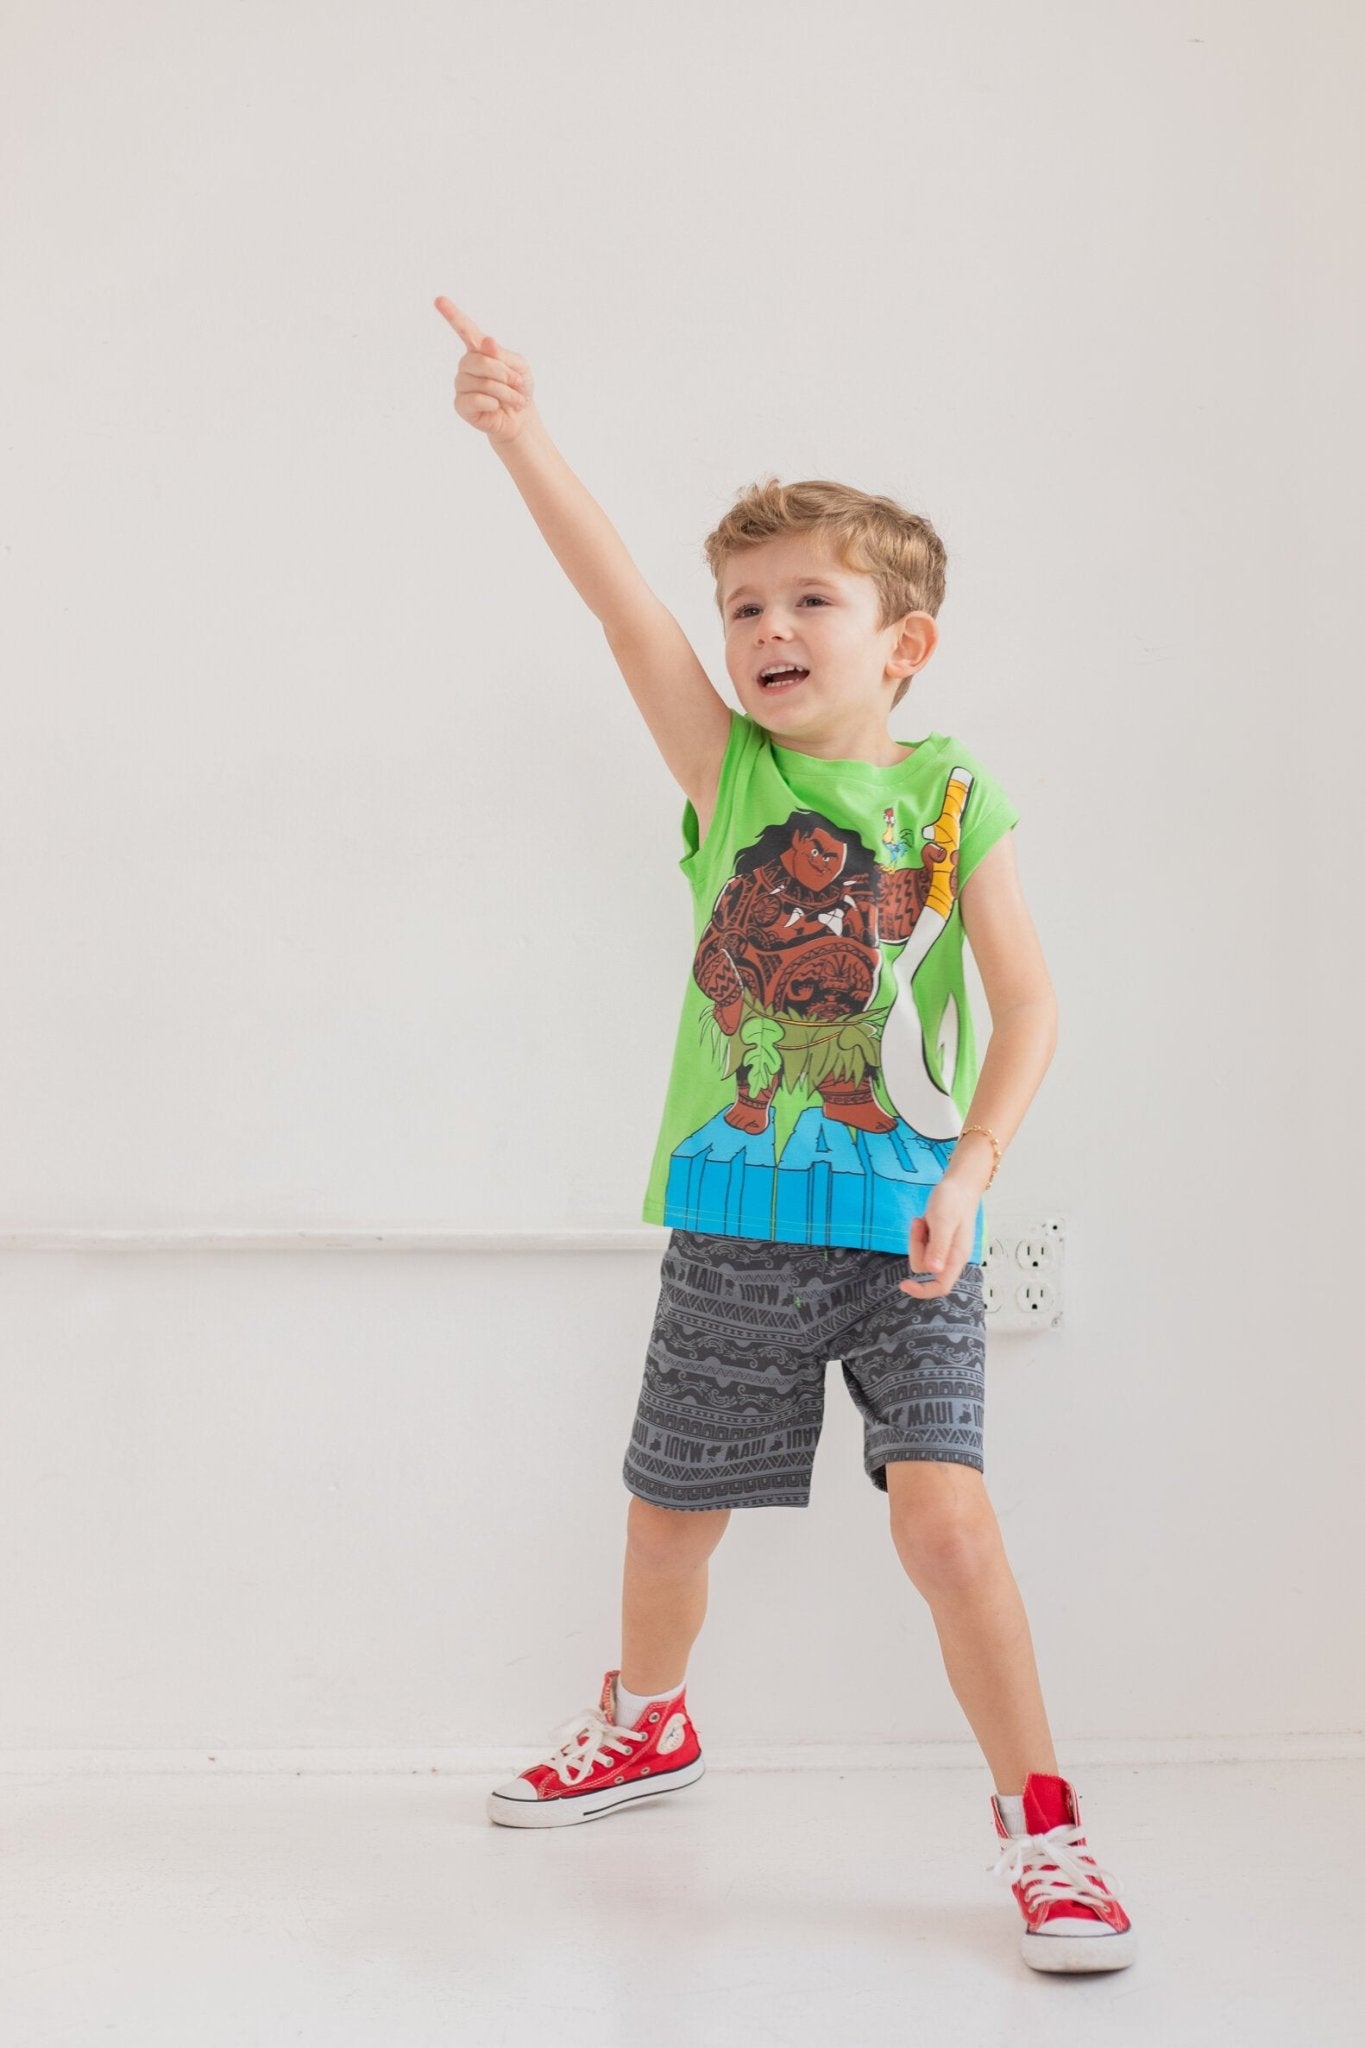 Disney Moana Maui French Terry T-Shirt Tank Top and Shorts 3 Piece Outfit Set - imagikids